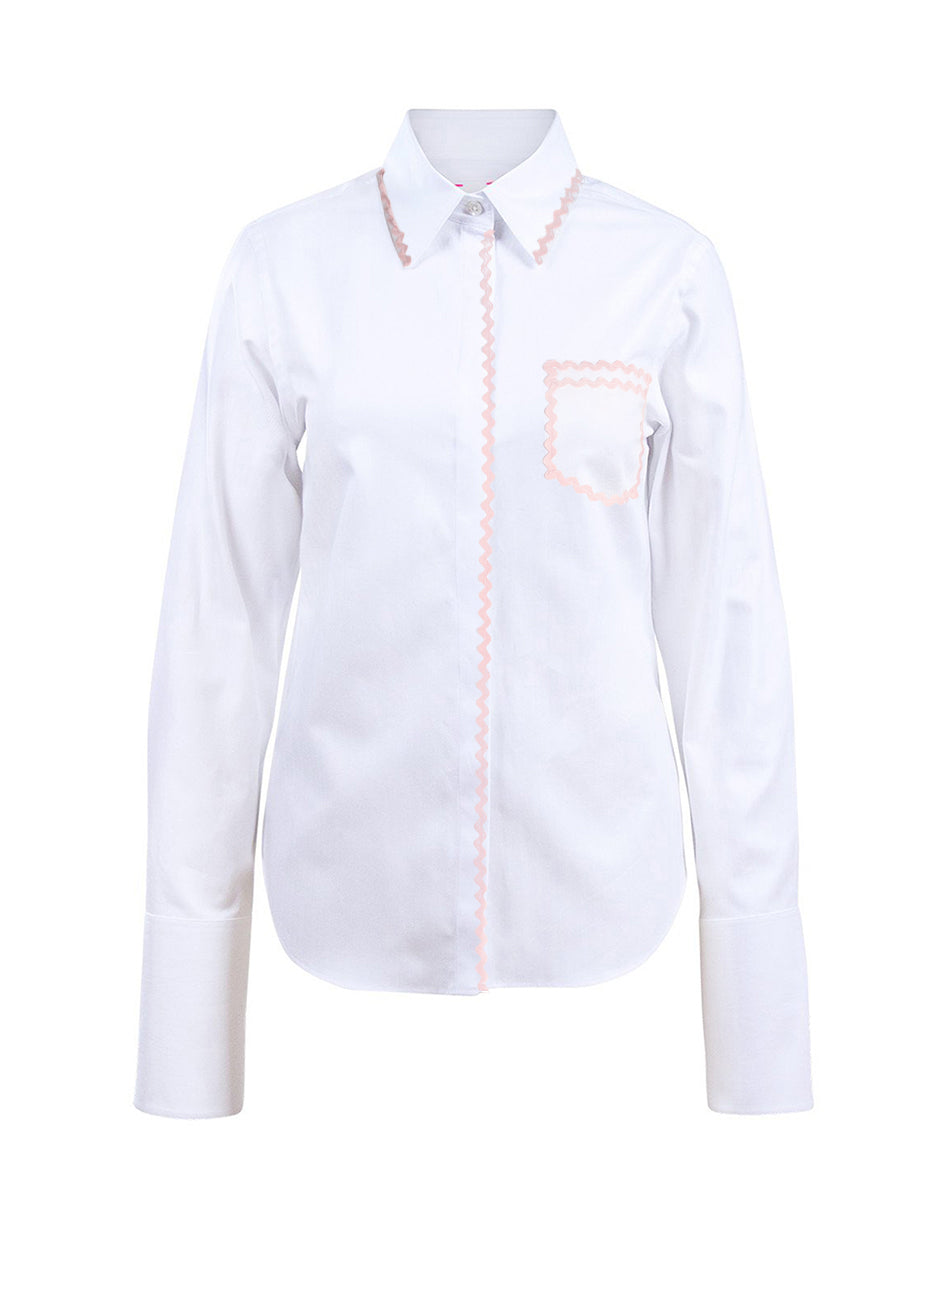 The Newport Ric Rac Shirt - White/Pink